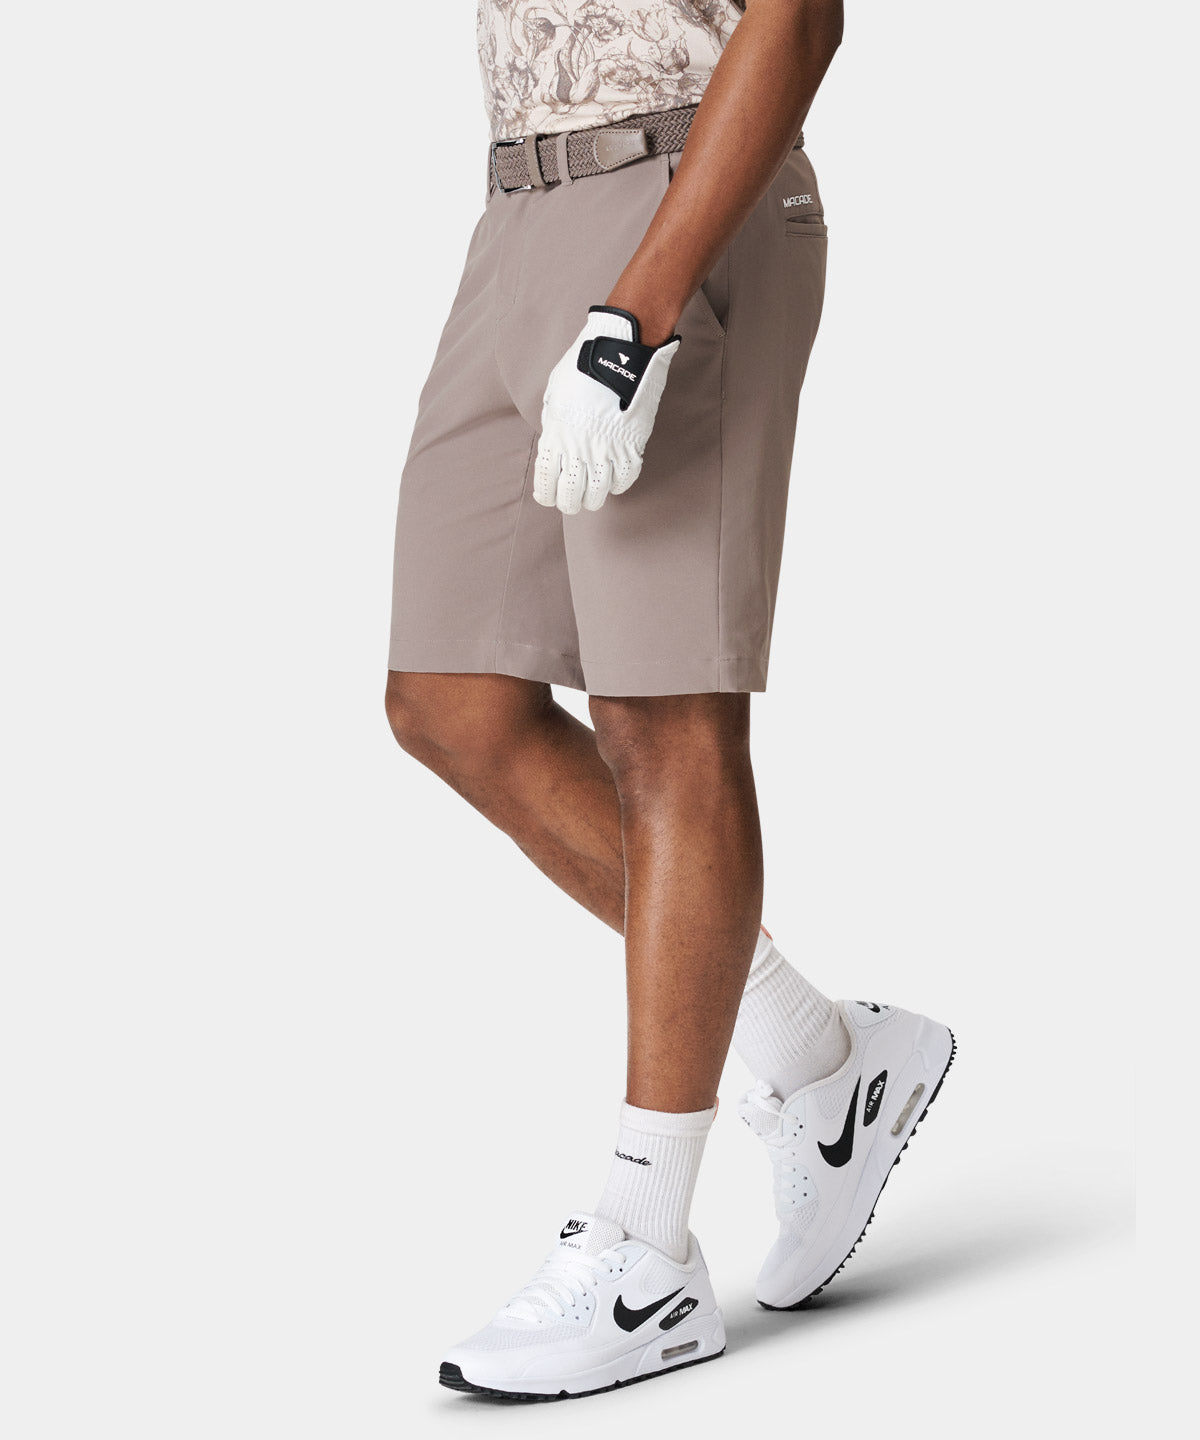 Khaki Four-Way Stretch Shorts Macade Golf